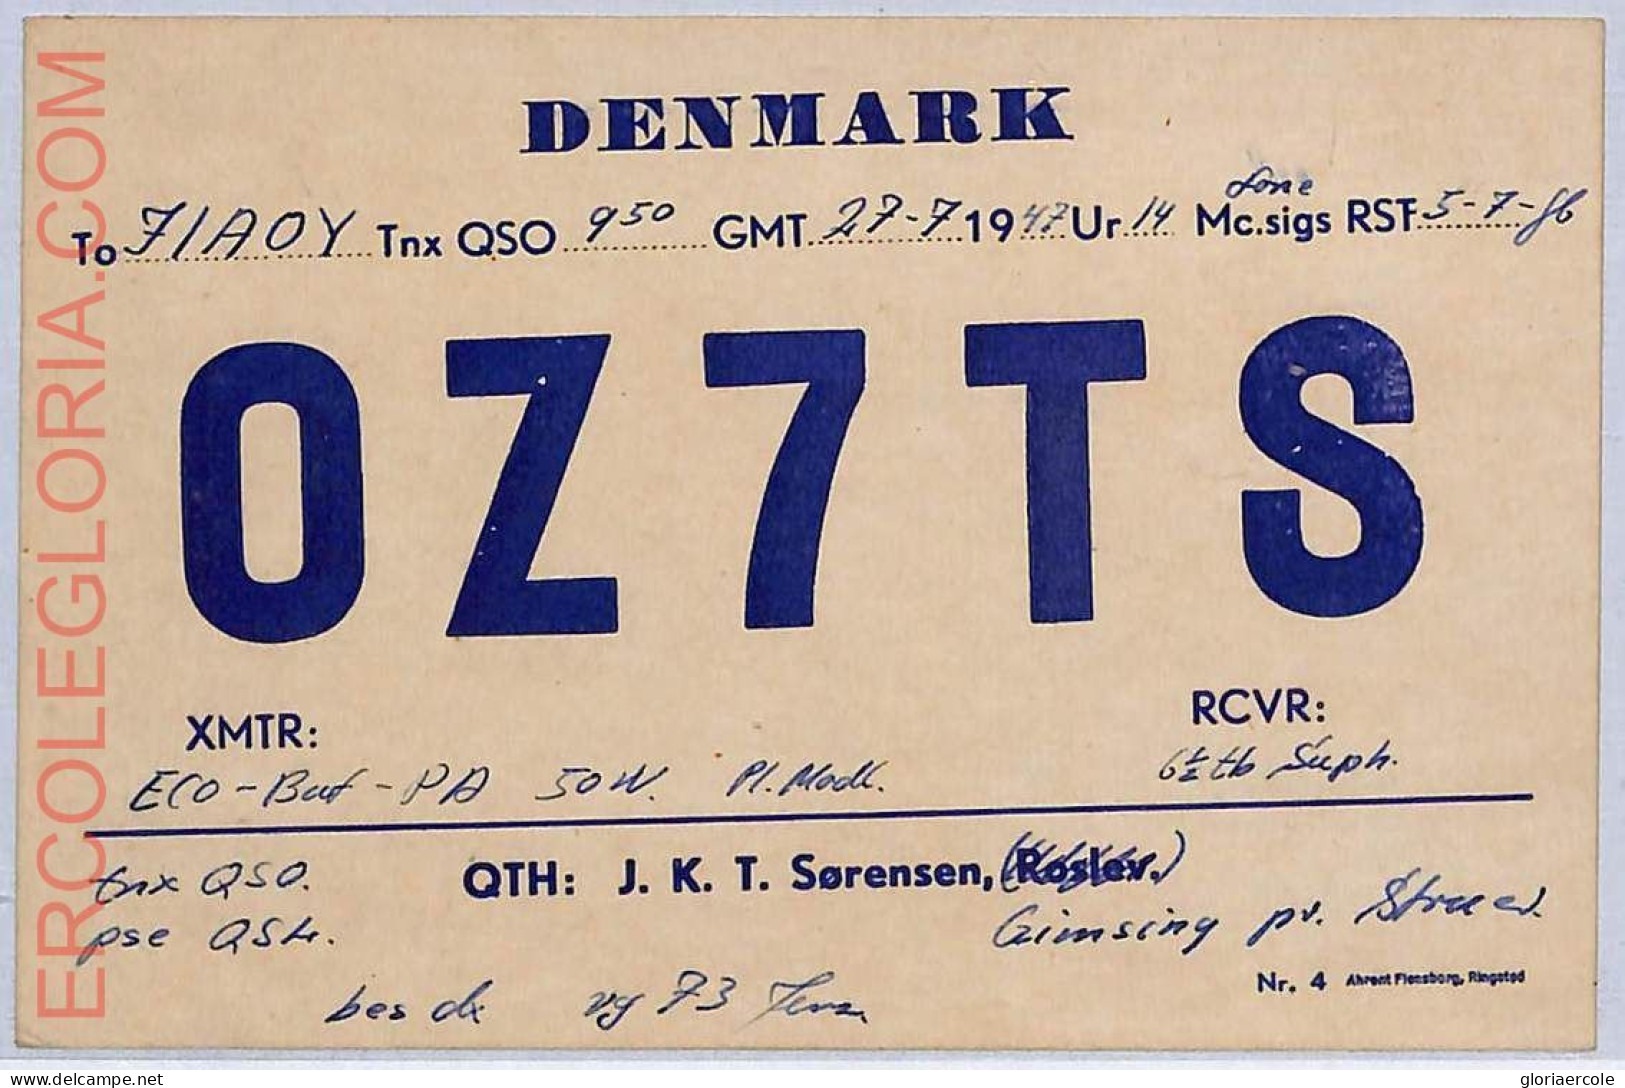 Ad9026 - DENMARK - RADIO FREQUENCY CARD - 1947 - Radio